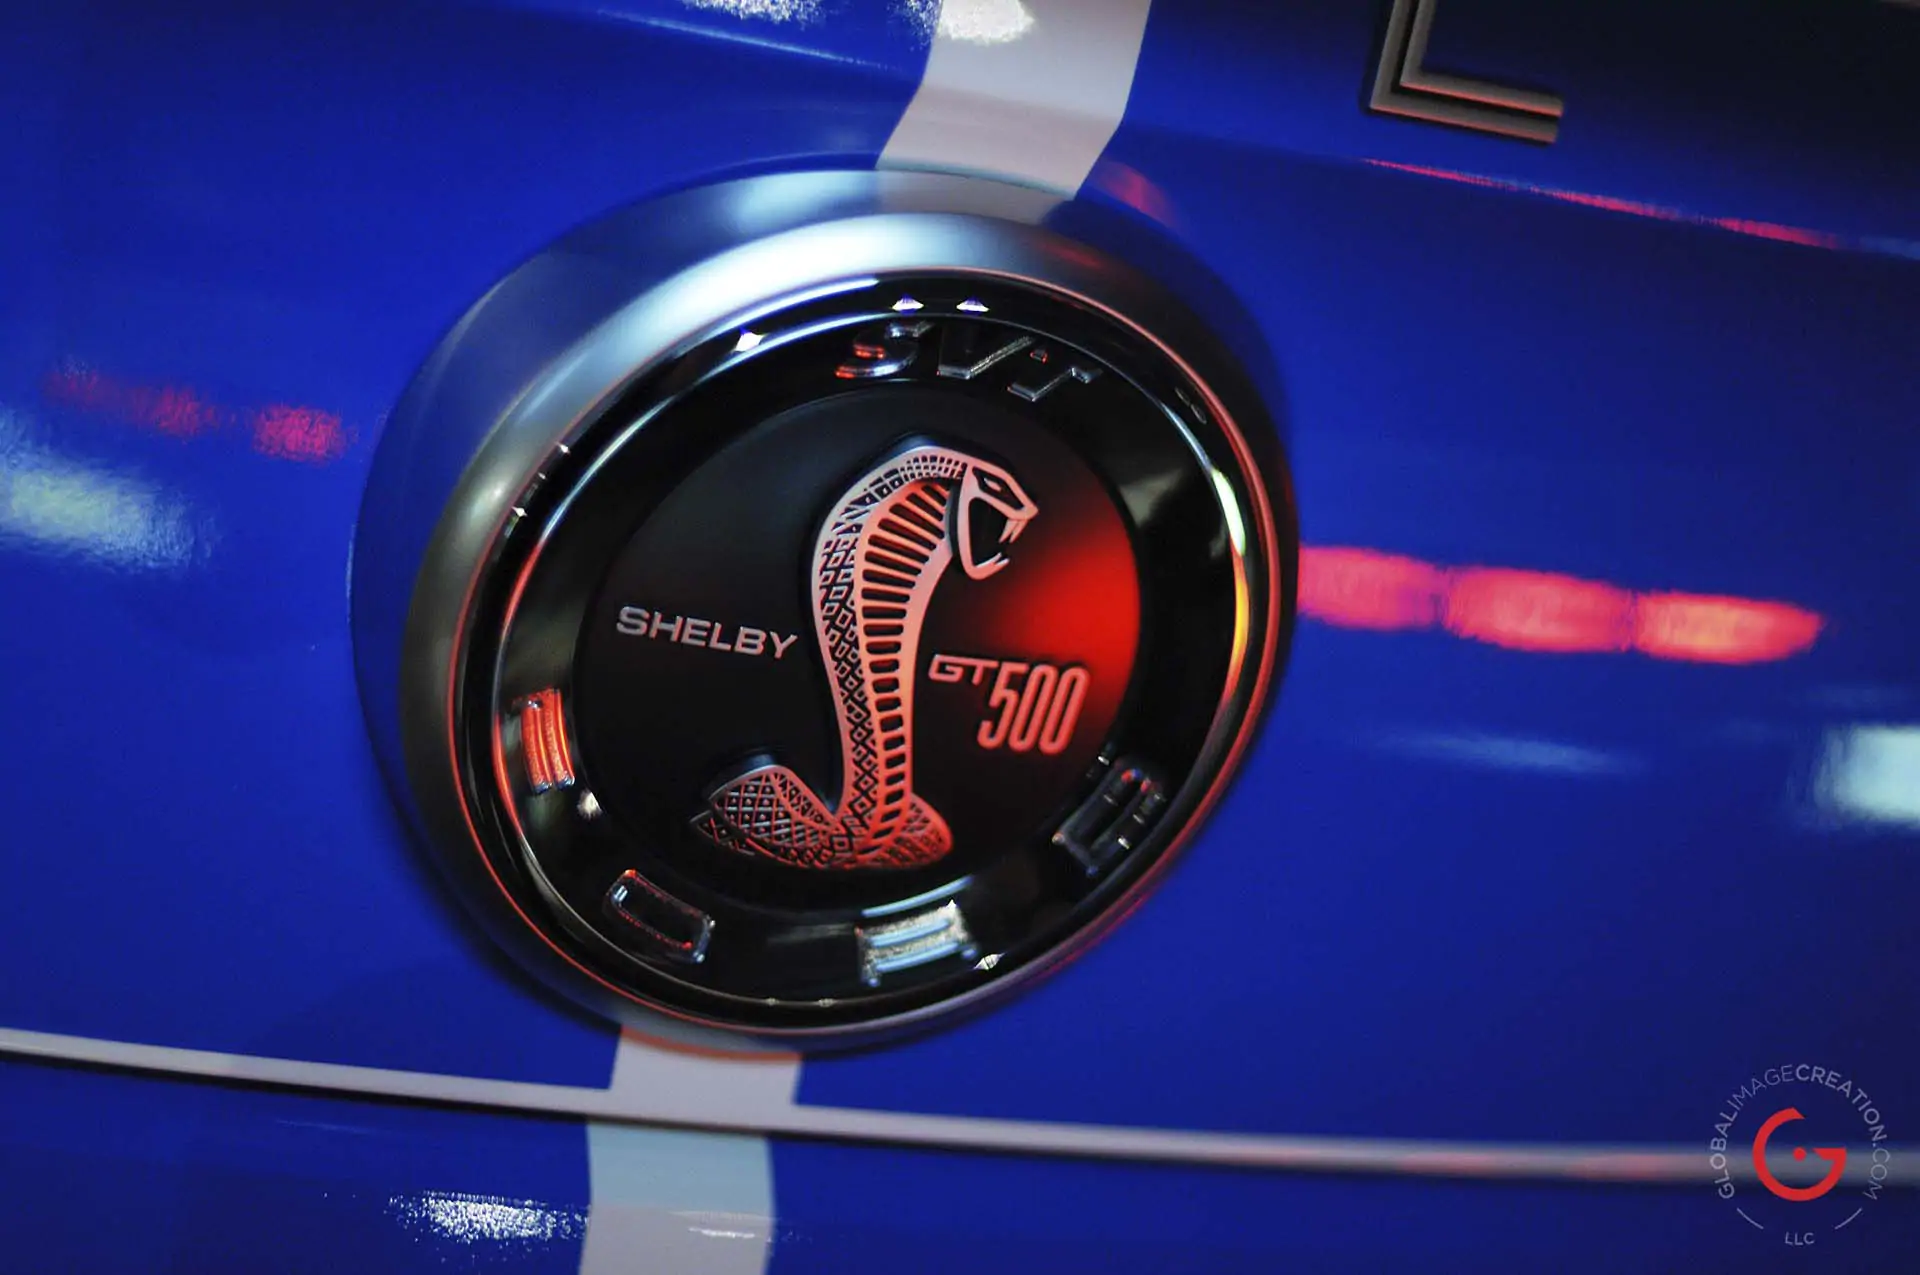 Shelby GT 500 Emblem Detail - Classic Cars Professional Car Photographer, Automotive Photography